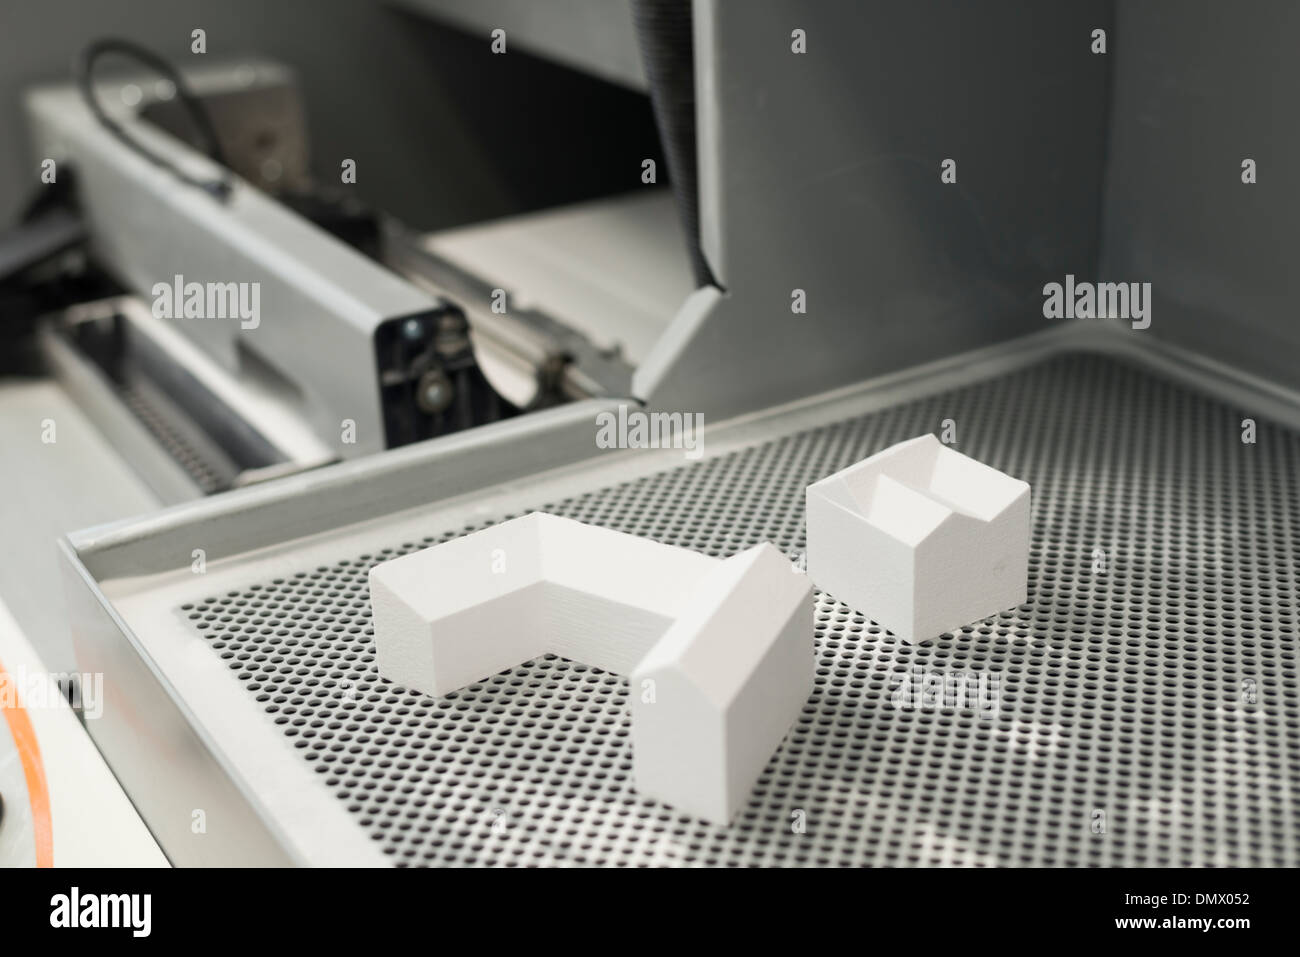 3D model making machine/printer with models Stock Photo: 64495118 - 3D MoDel Making Machineprinter With MoDels DMX052